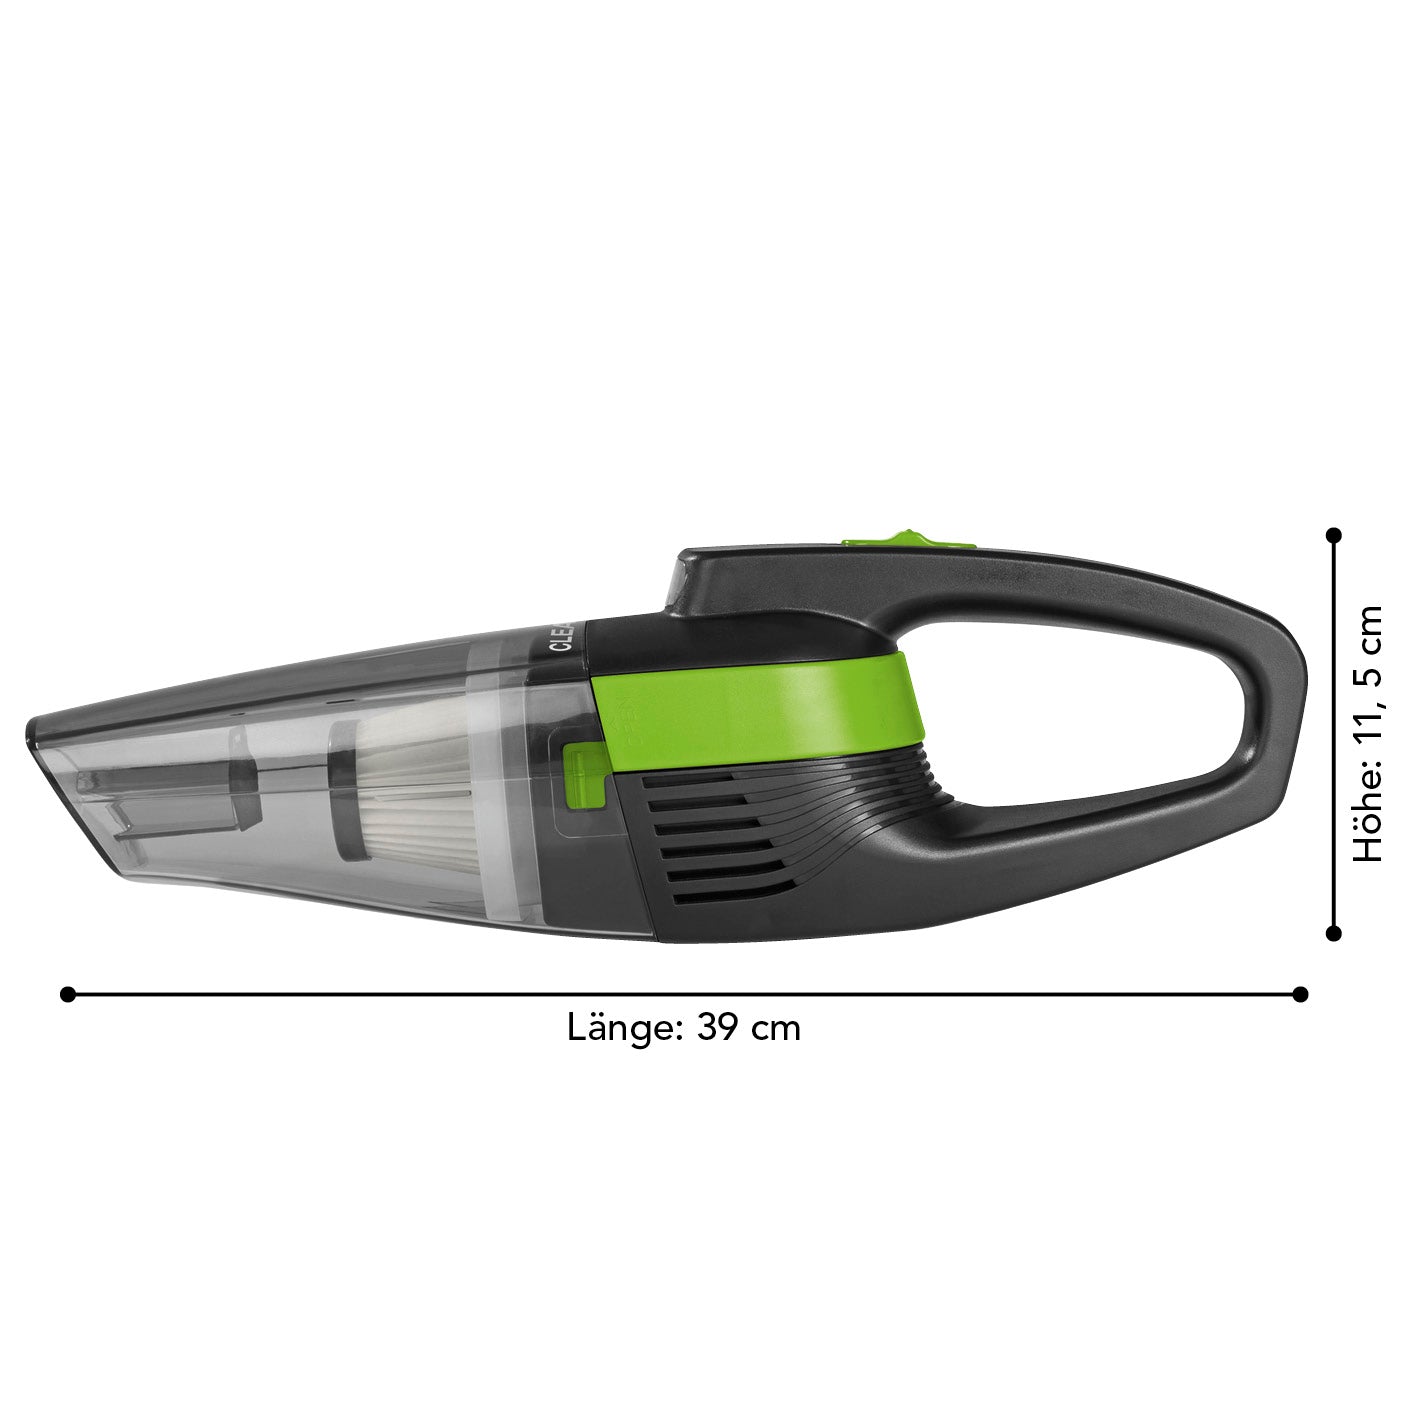 Akku-Handstaubsauger mit Autoadapter - grün/grau